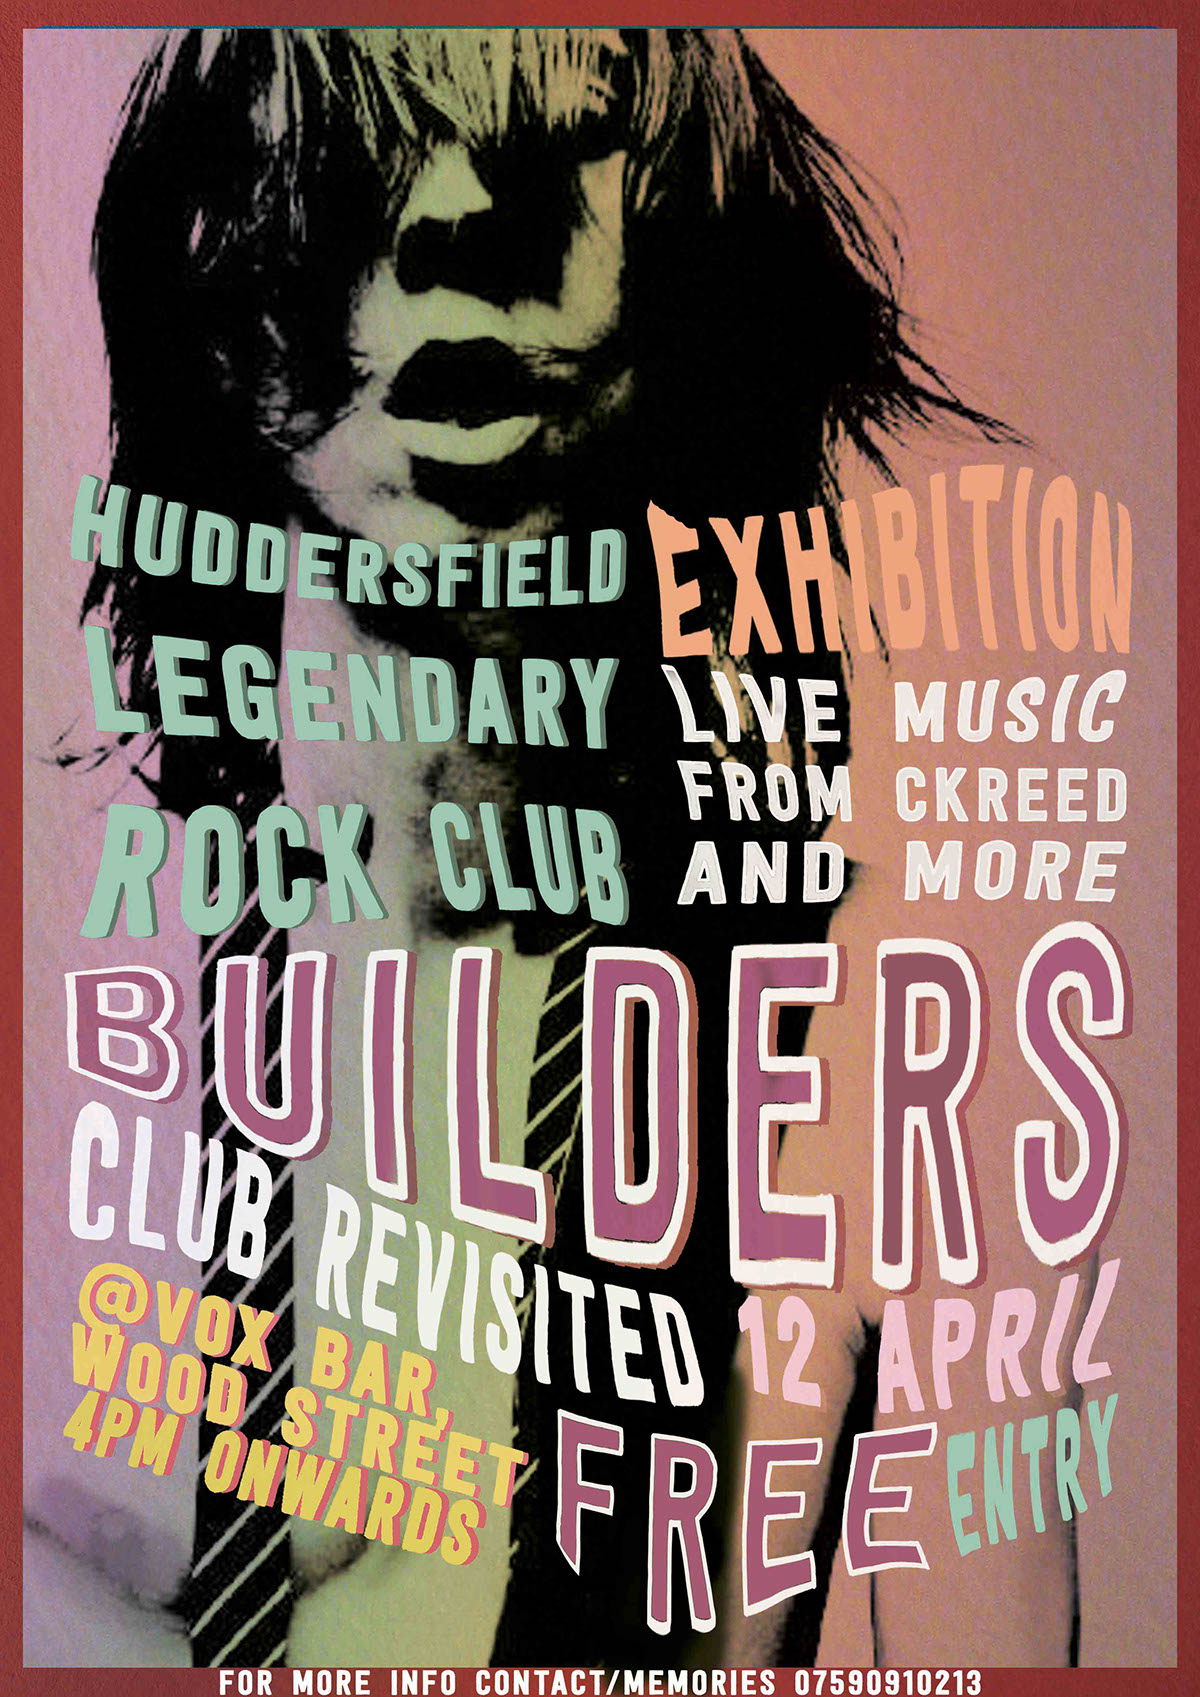 Huddersfield rock builders club revisited vox bar 60s psychedelic Legendary live trippy vibrant folk Retro